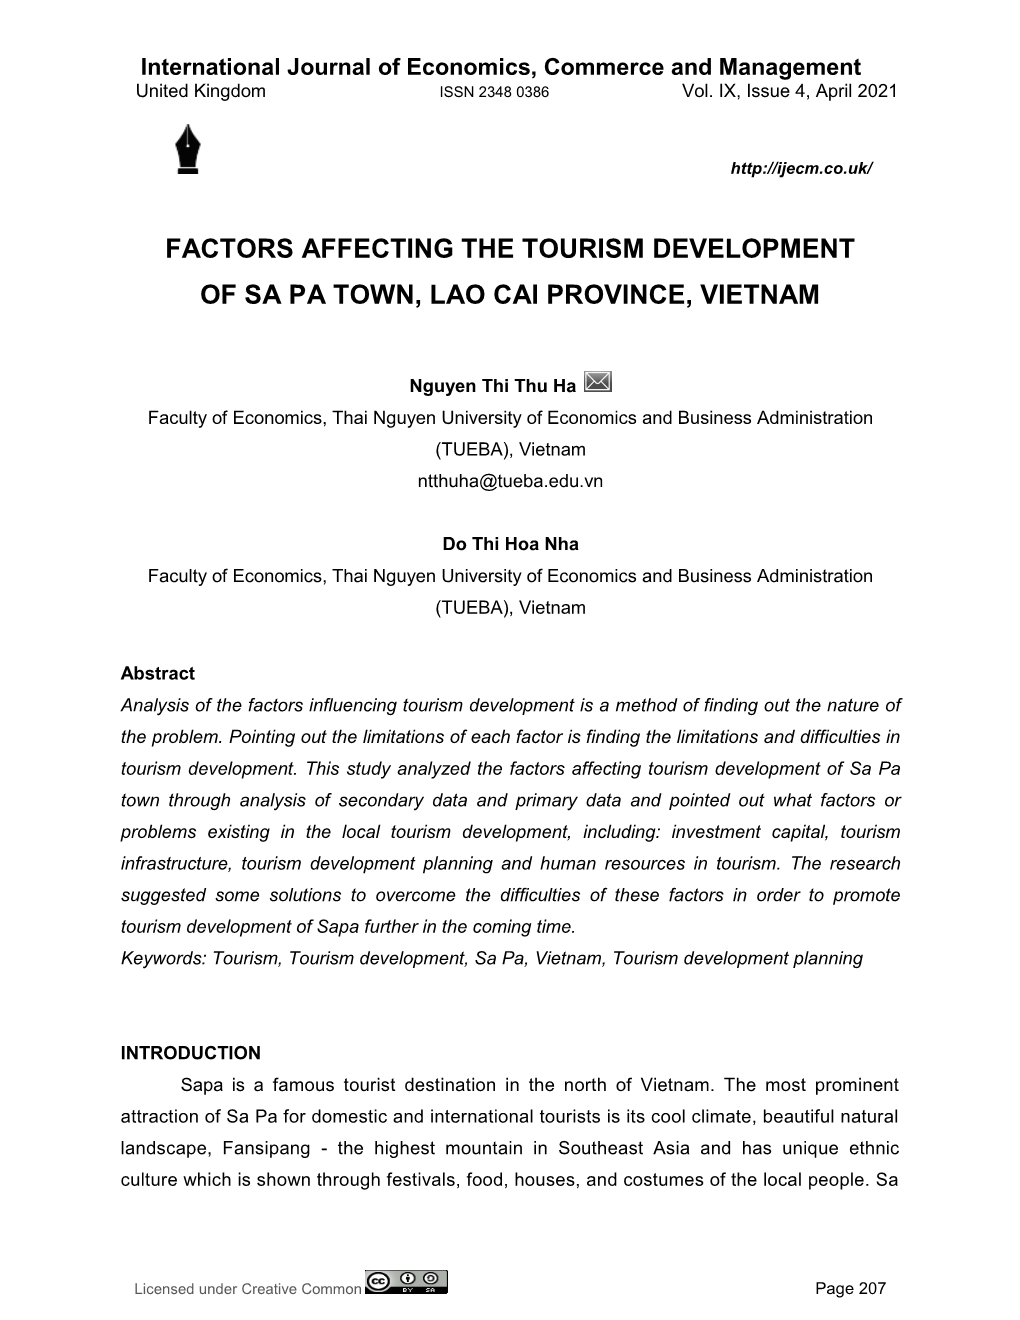 Factors Affecting the Tourism Development of Sa Pa Town, Lao Cai Province, Vietnam